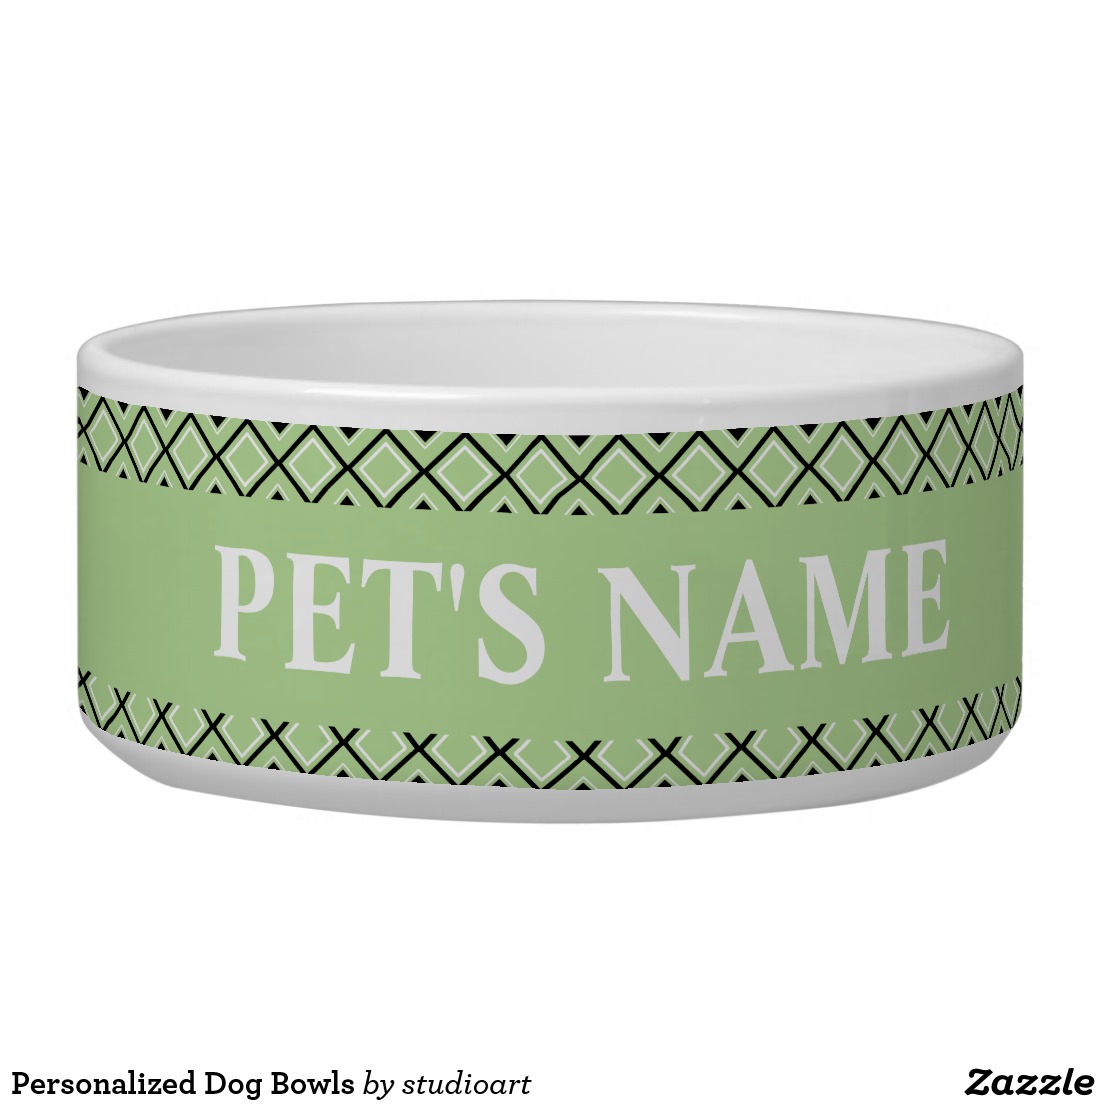 Personalized dog bowl